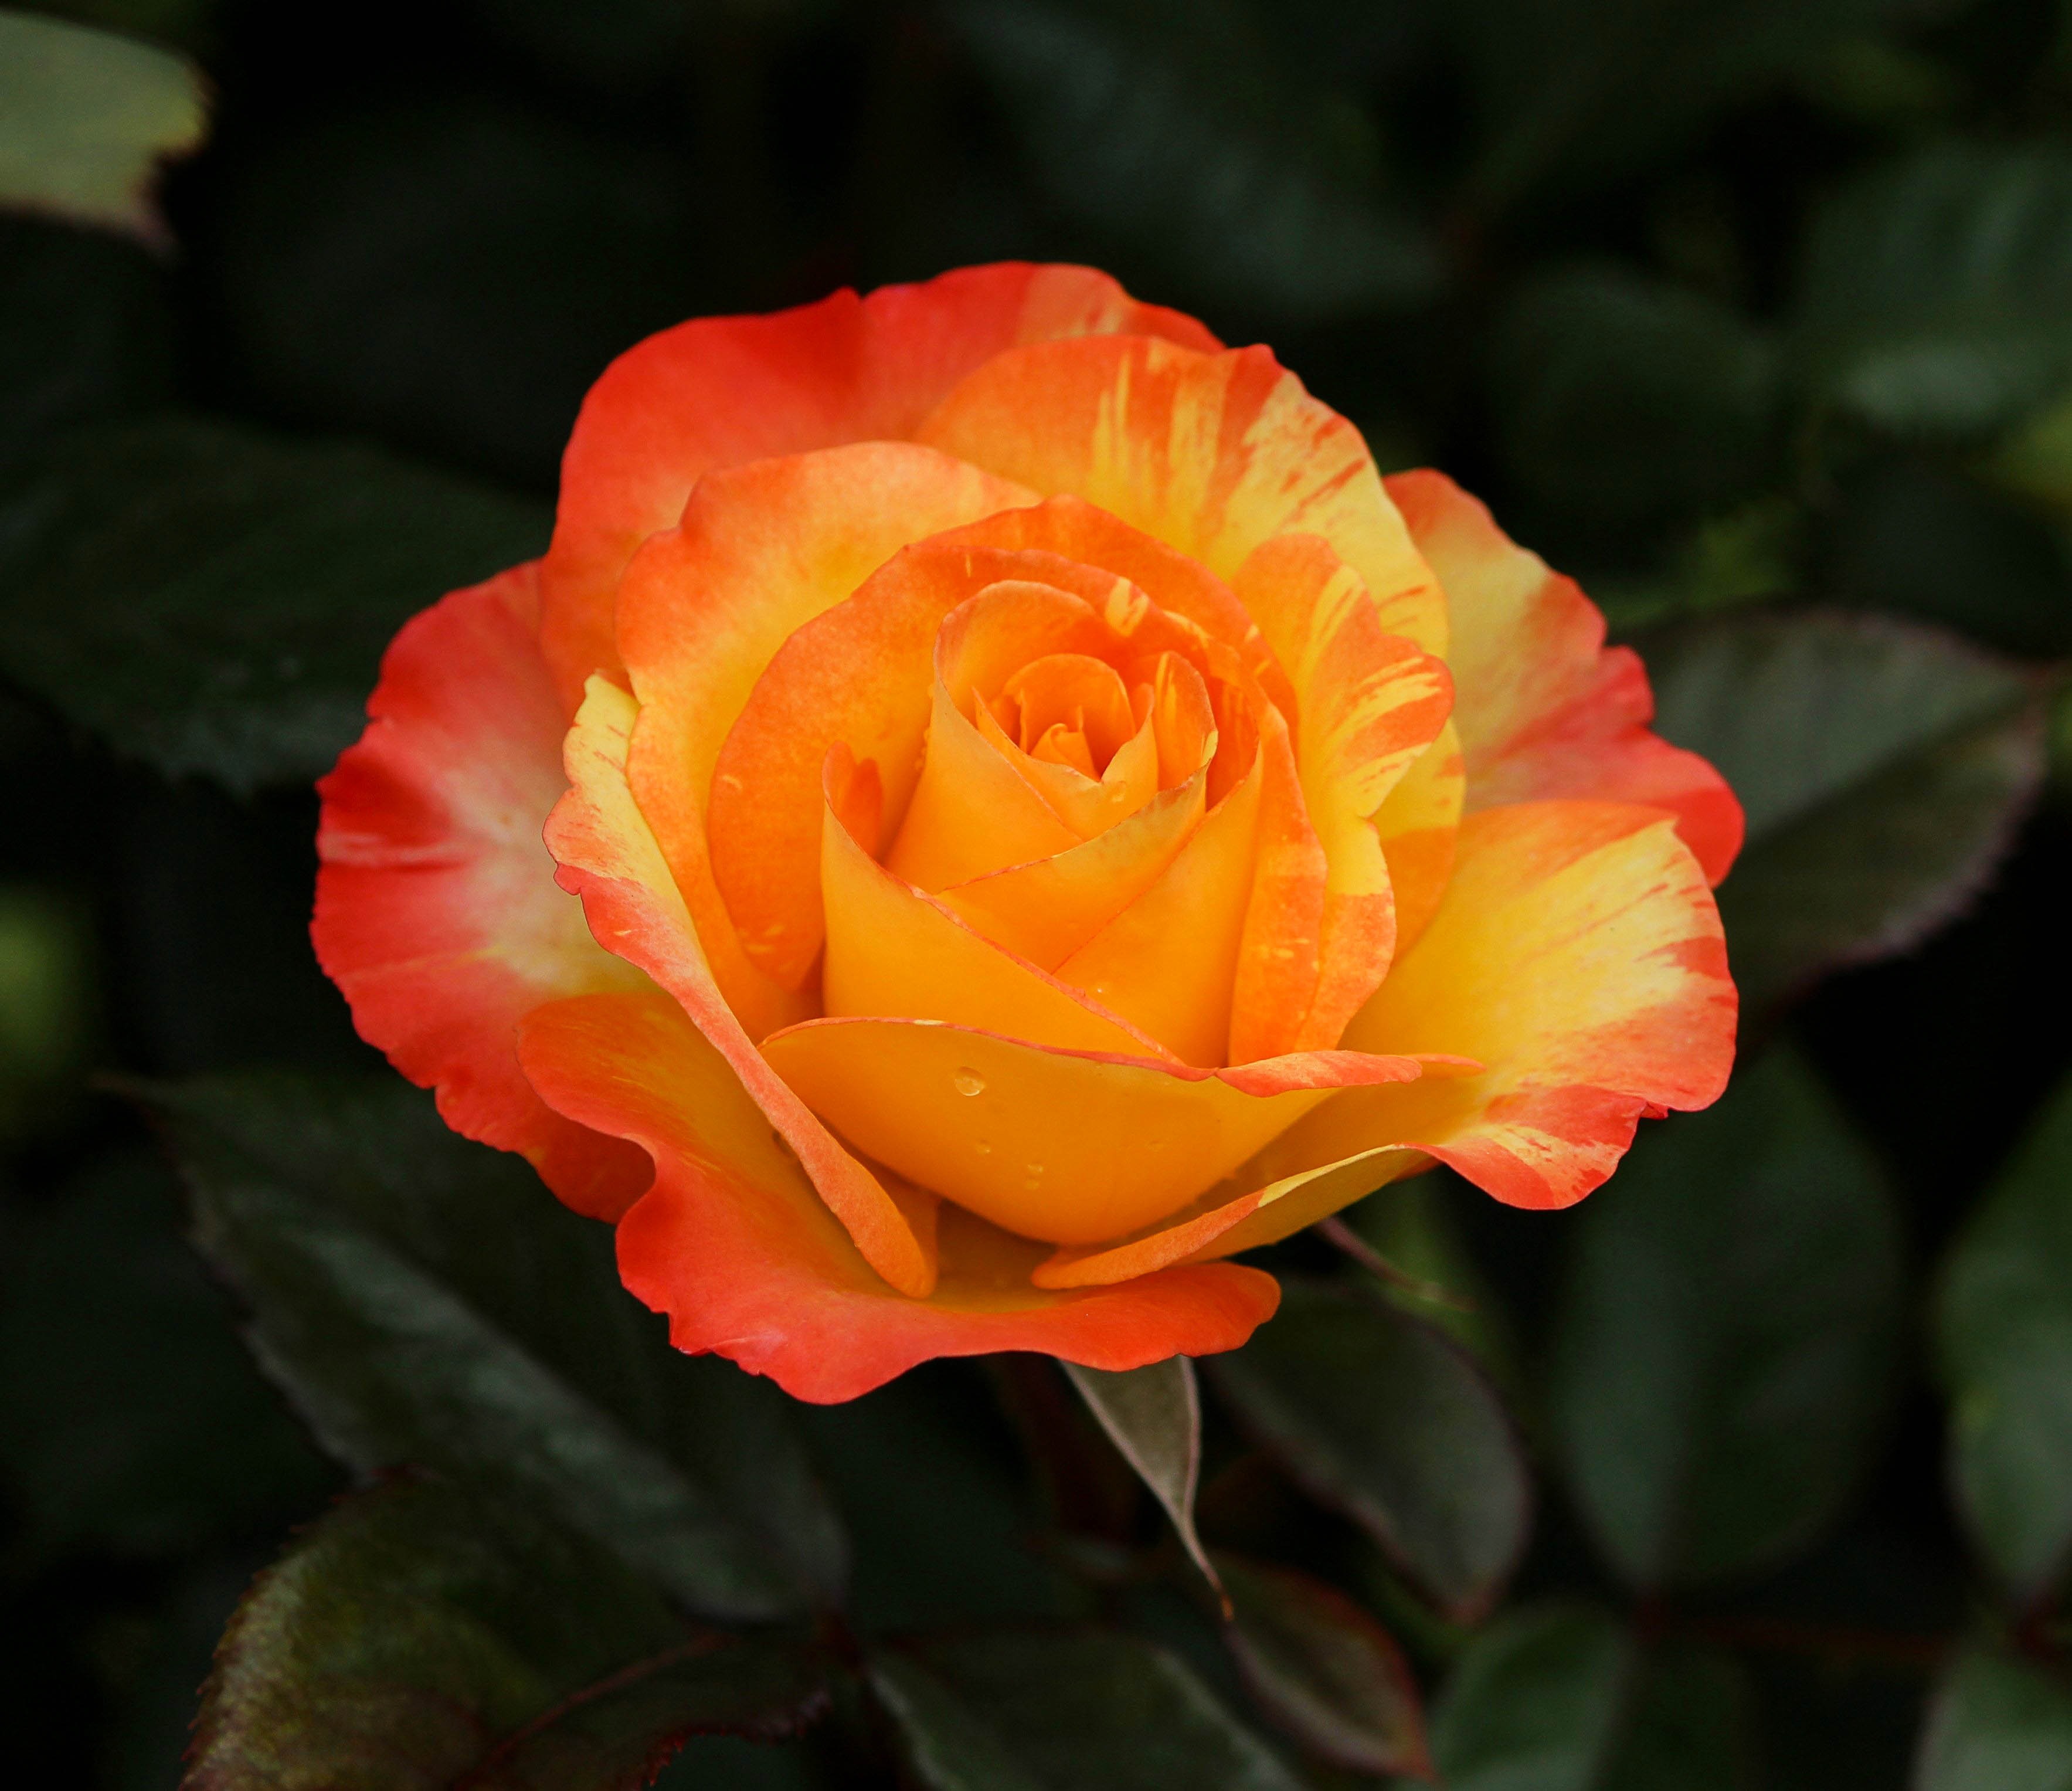 Yellow rose with orange edges free image download